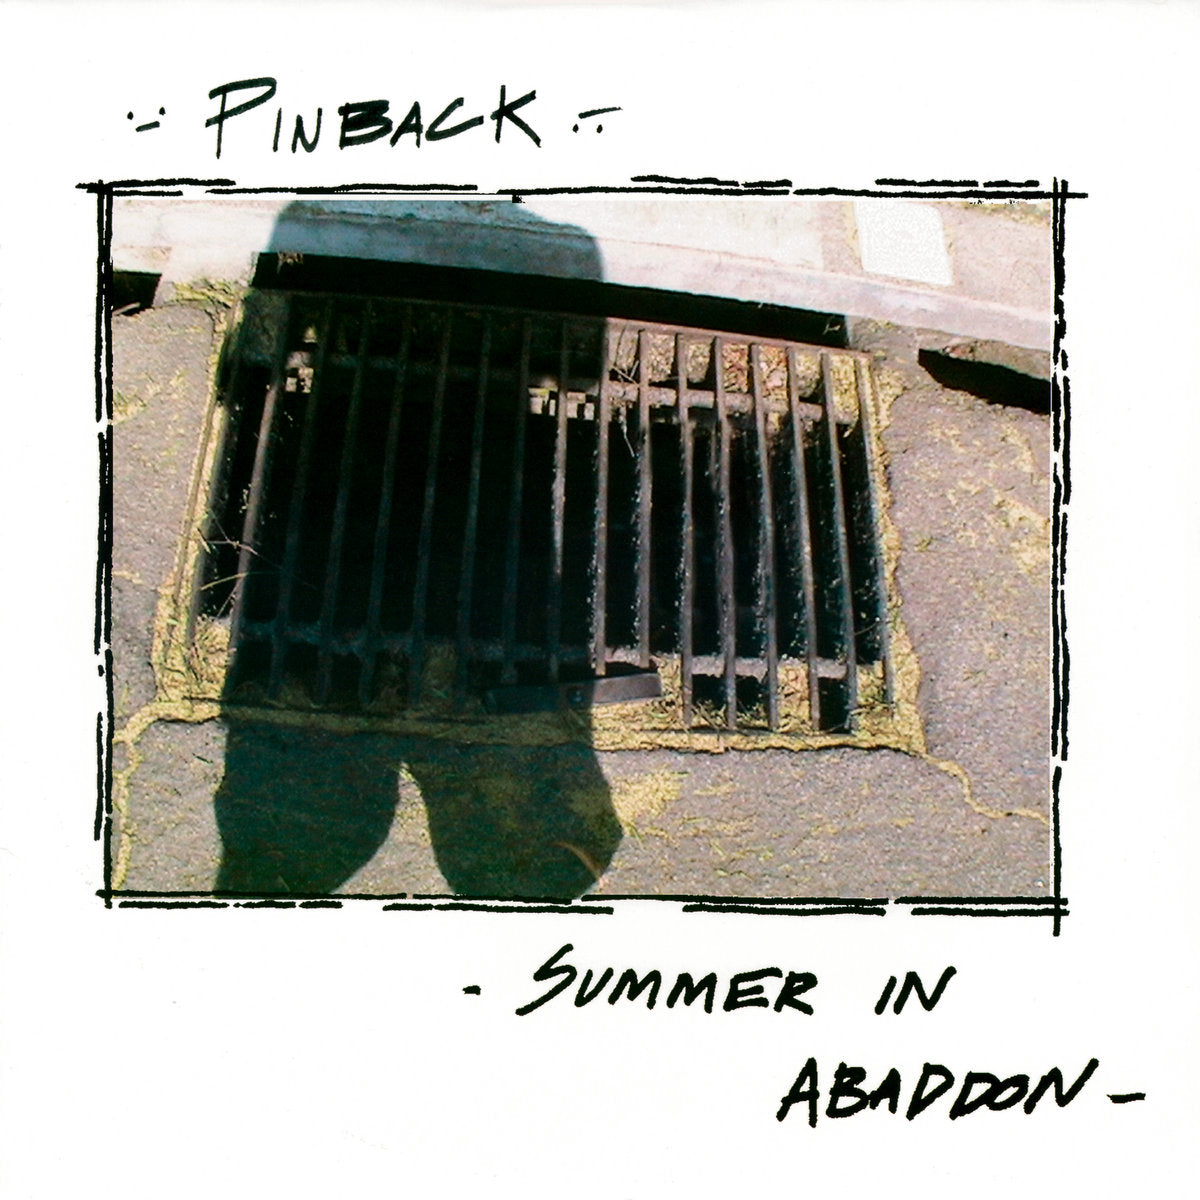 PINBACK - Summer in Abaddon - LP - Vinyl